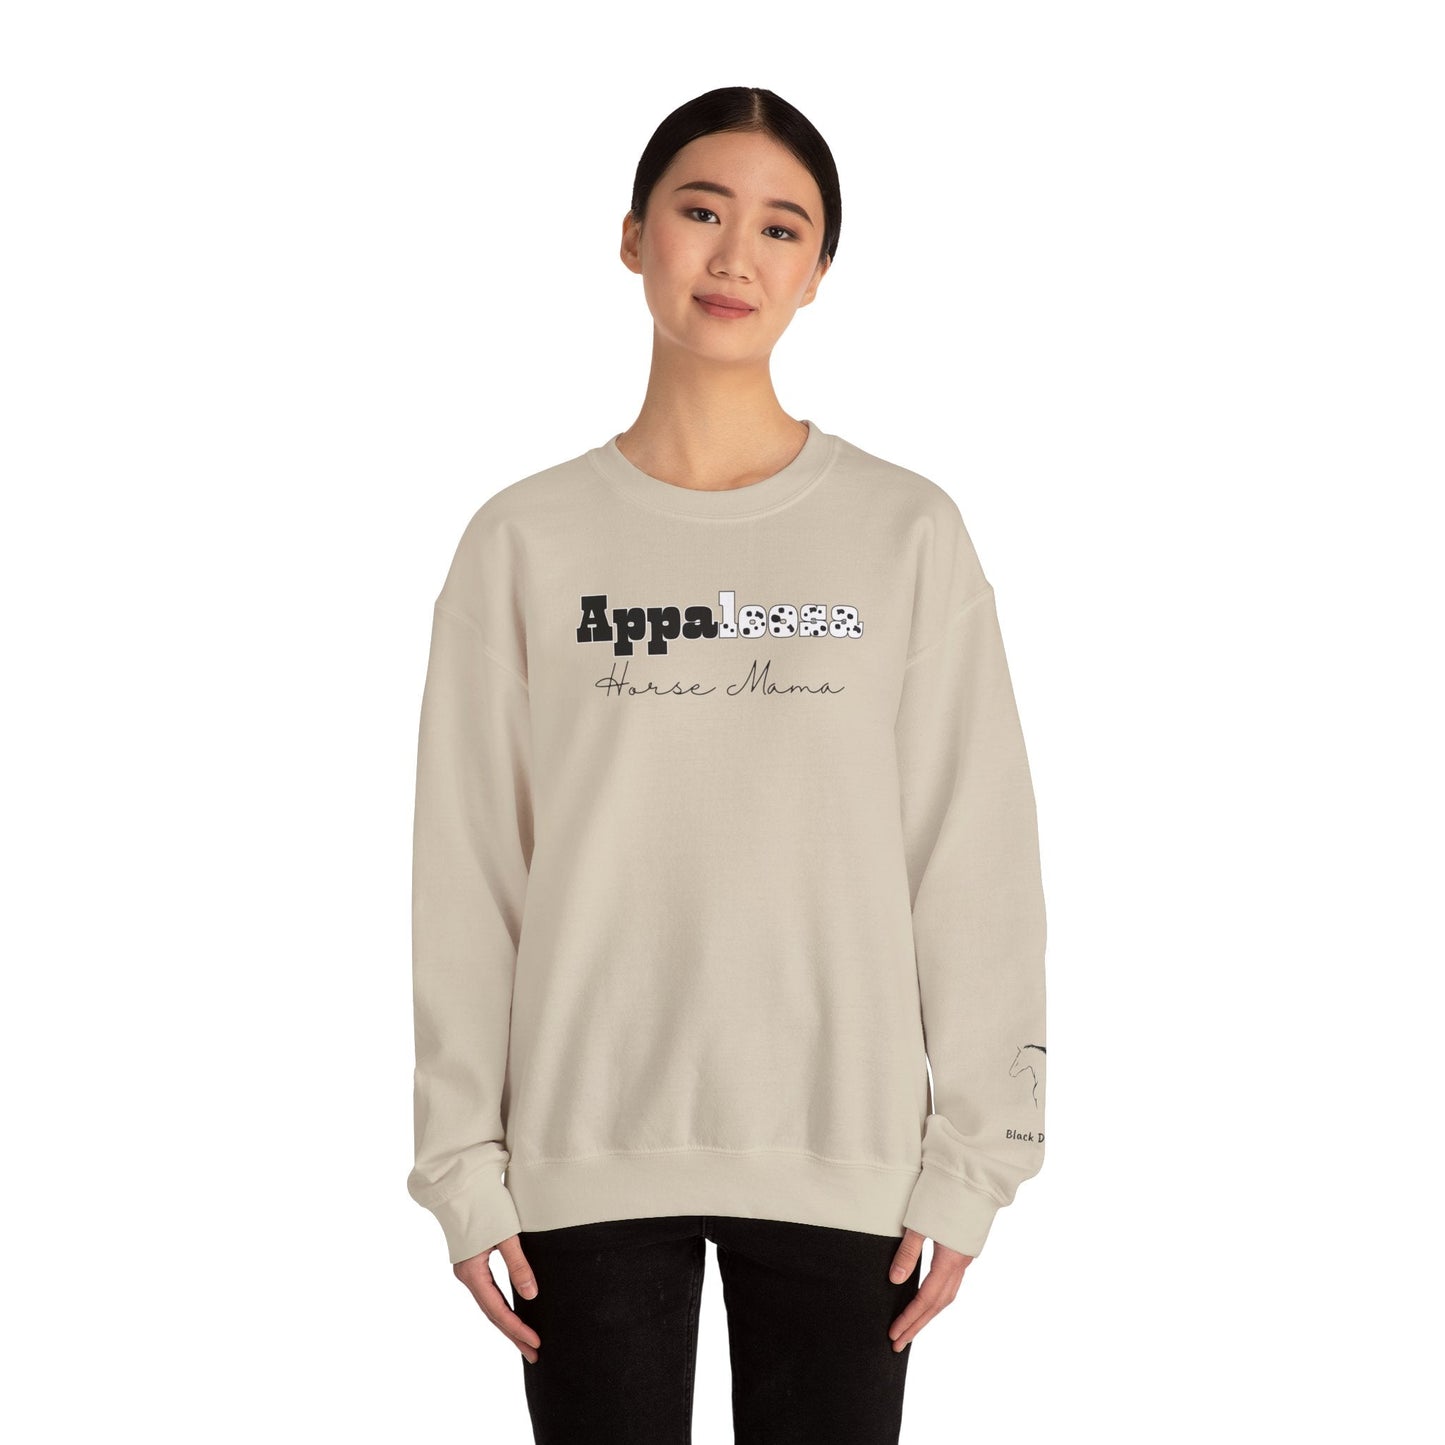 Personalized Appaloosa Horse Mama Sweatshirt with Horse Name on Sleeve - FlooredByArt